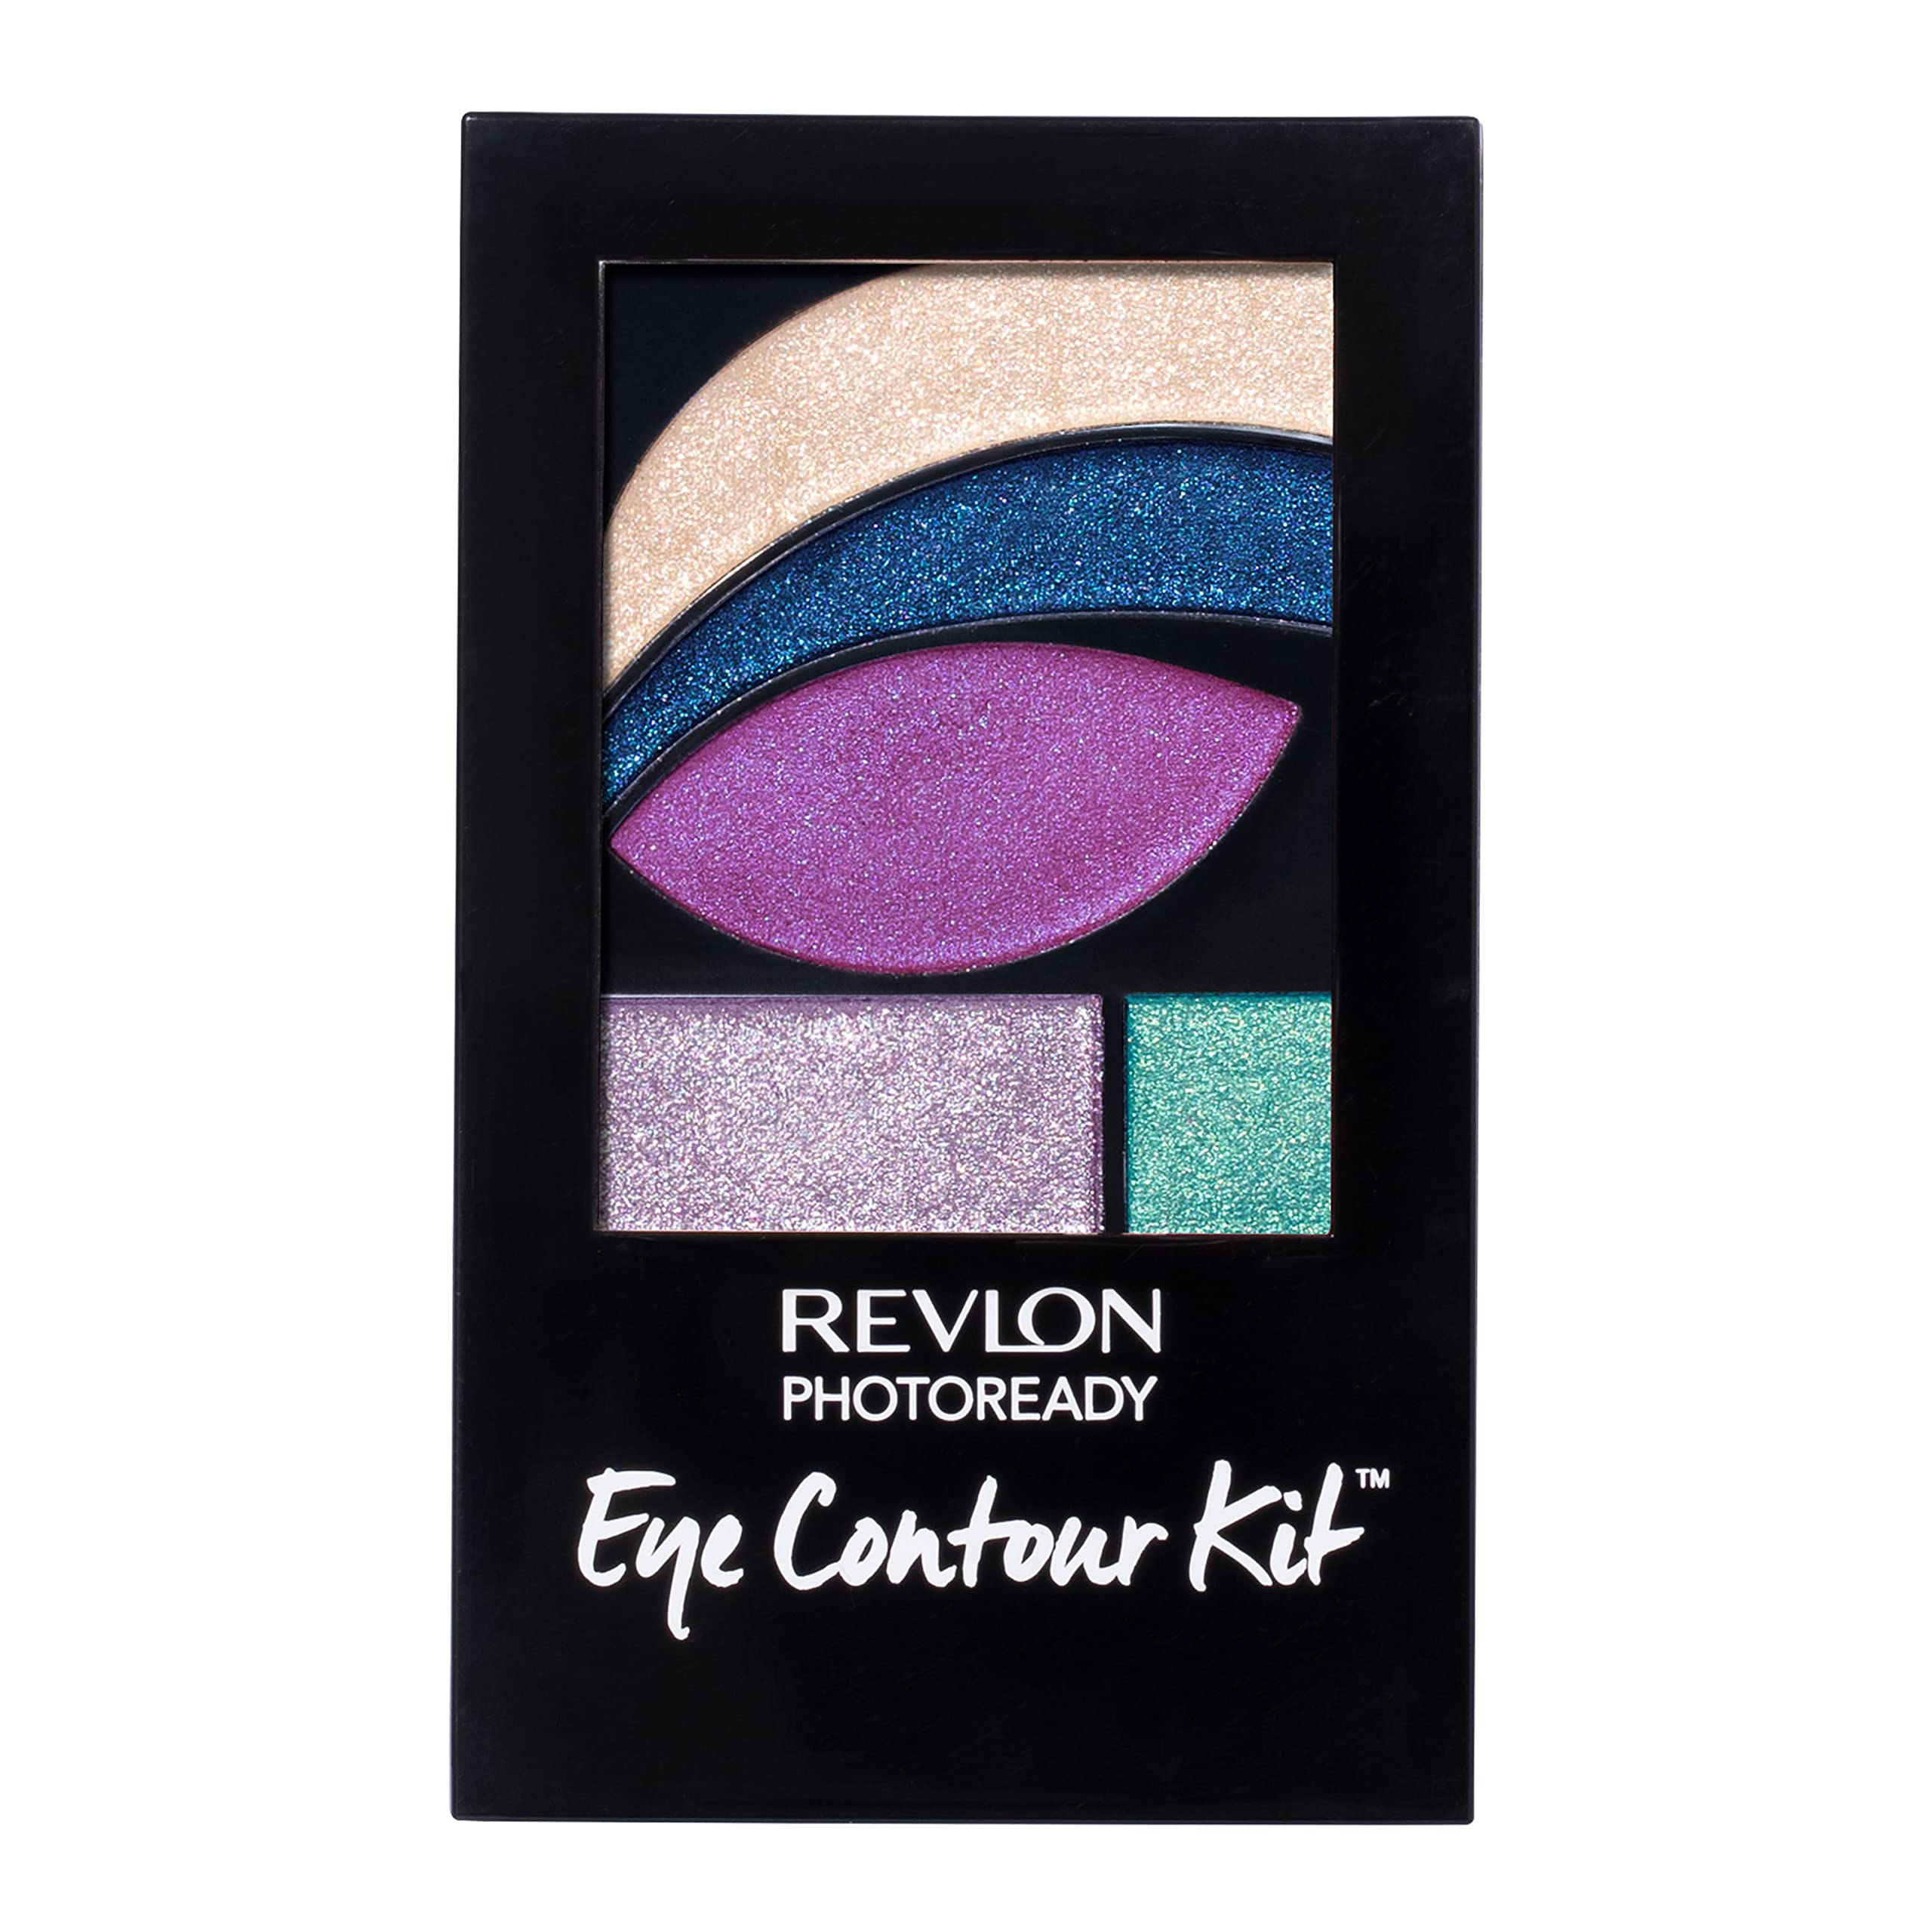 REVLON PhotoReady Eye Contour Kit